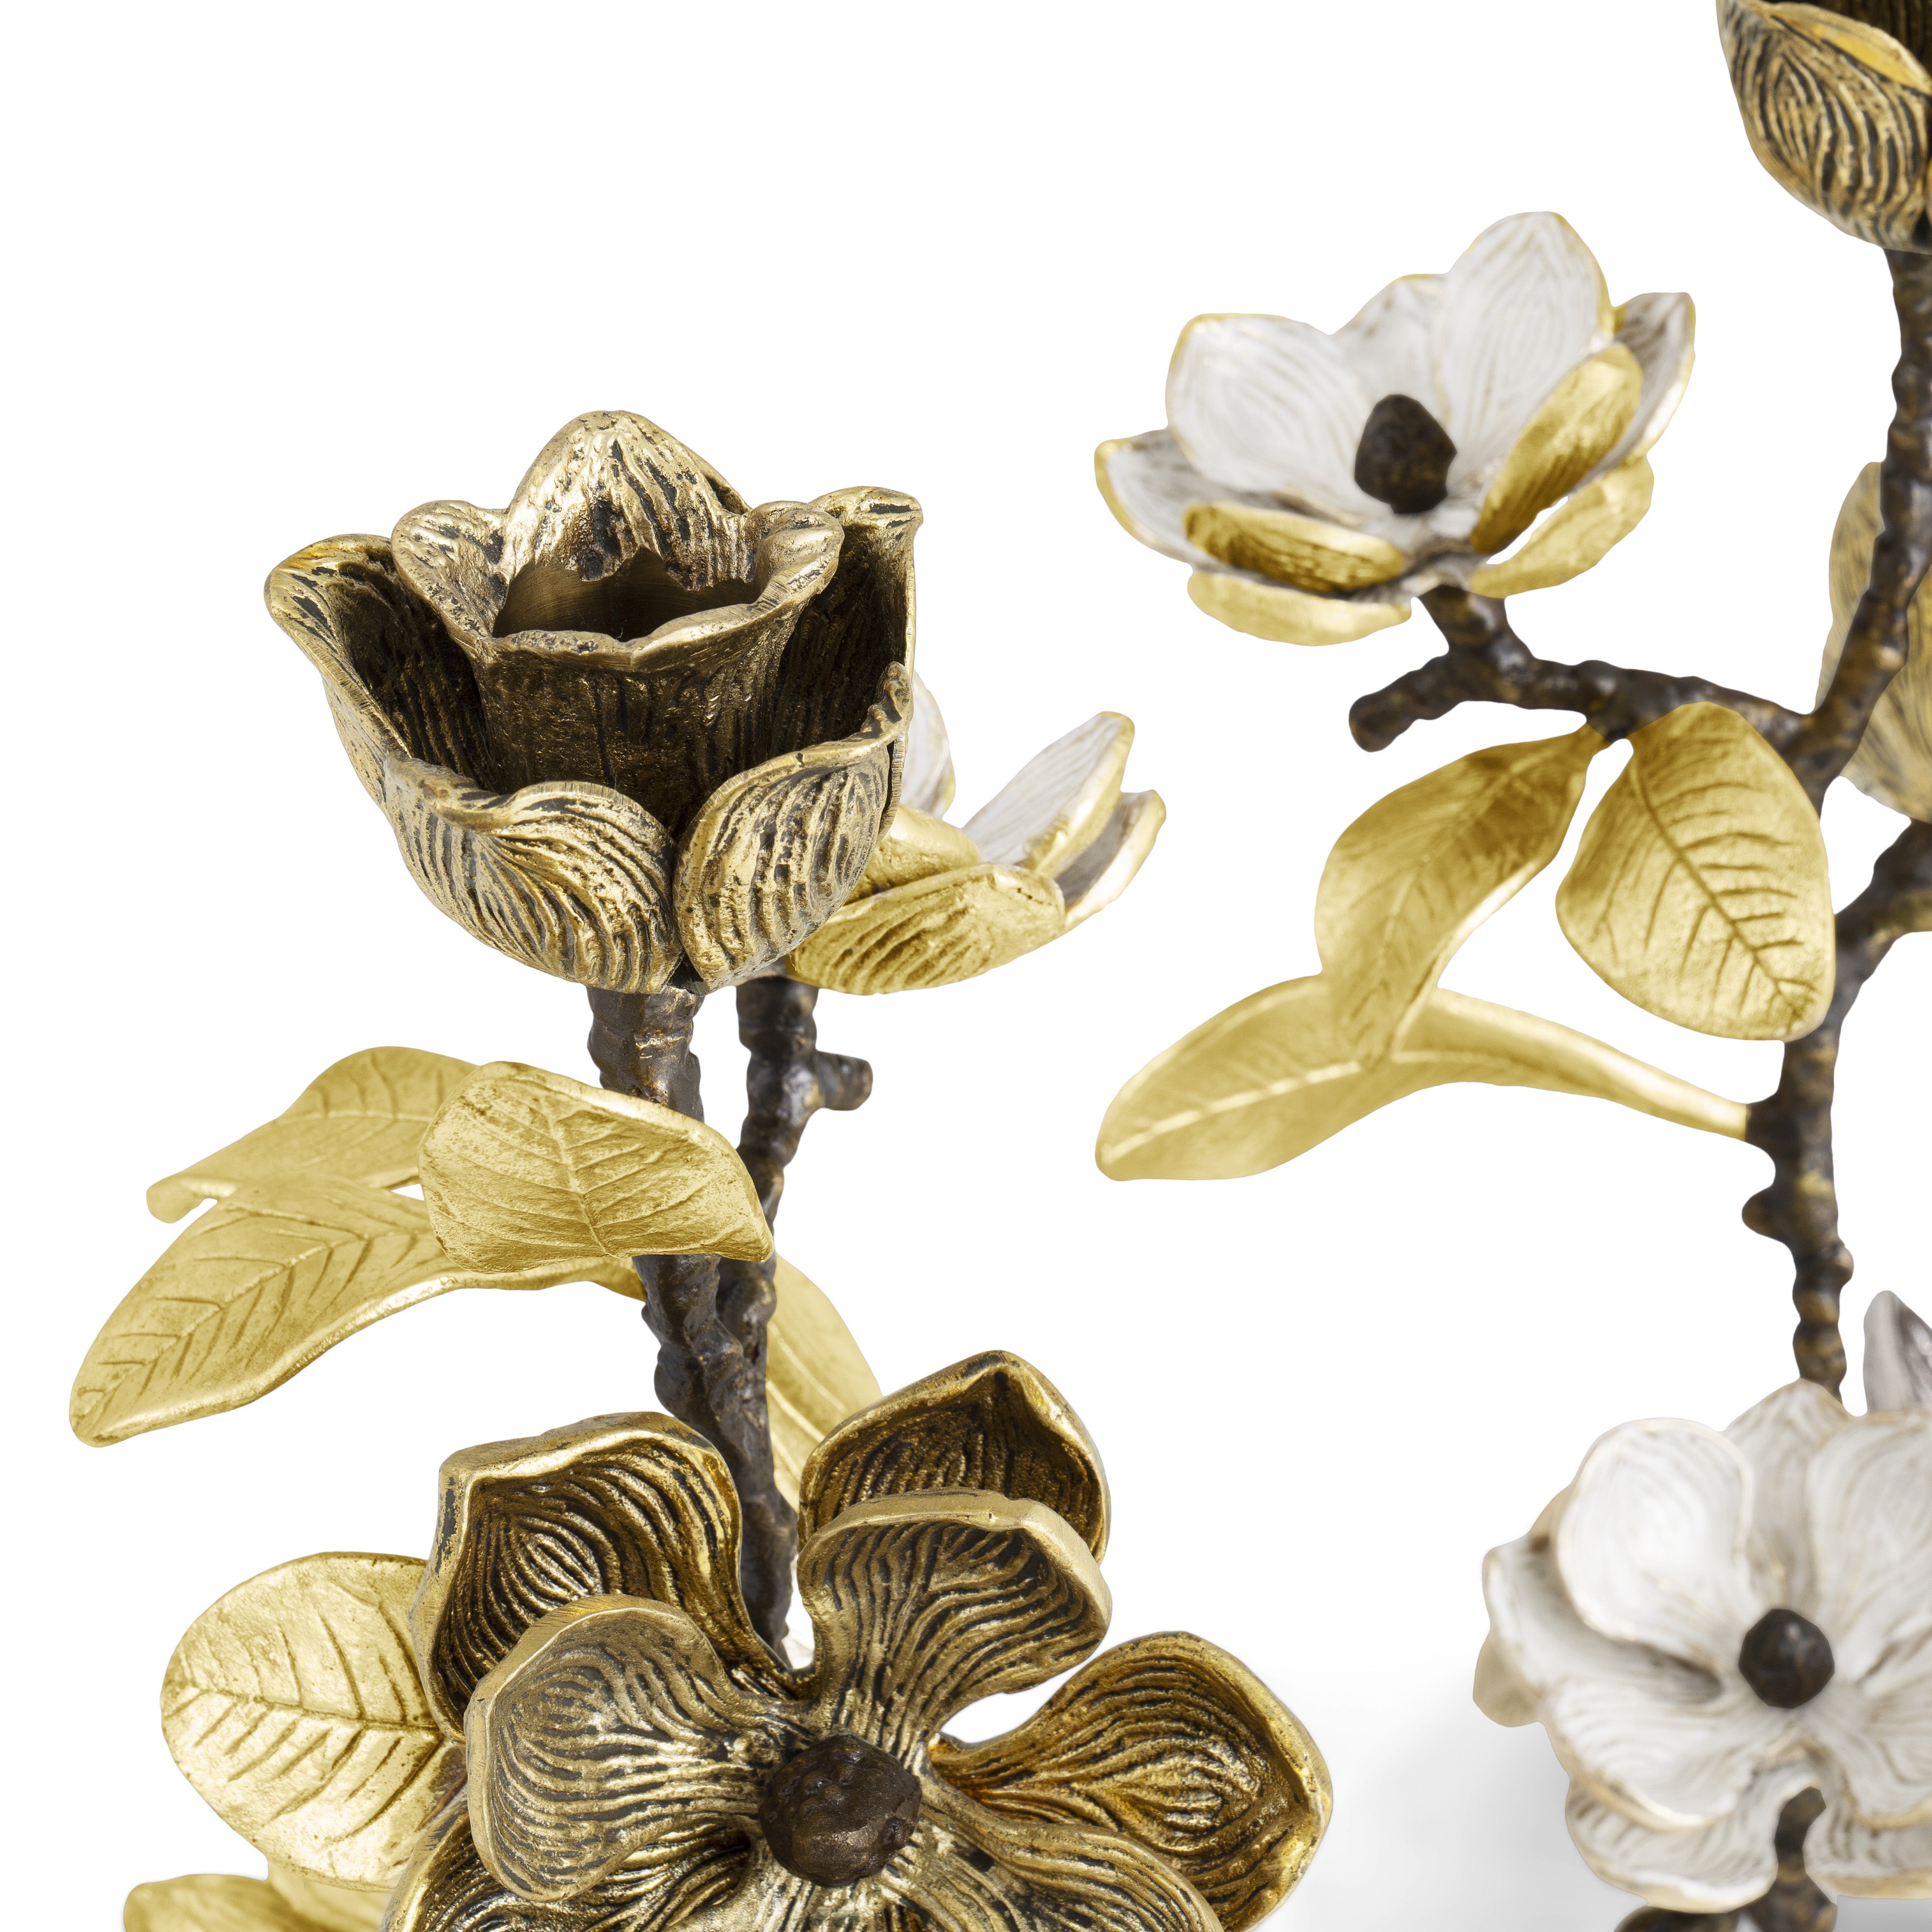 Magnolia Branch Wall Art-Antique Brass/Gold